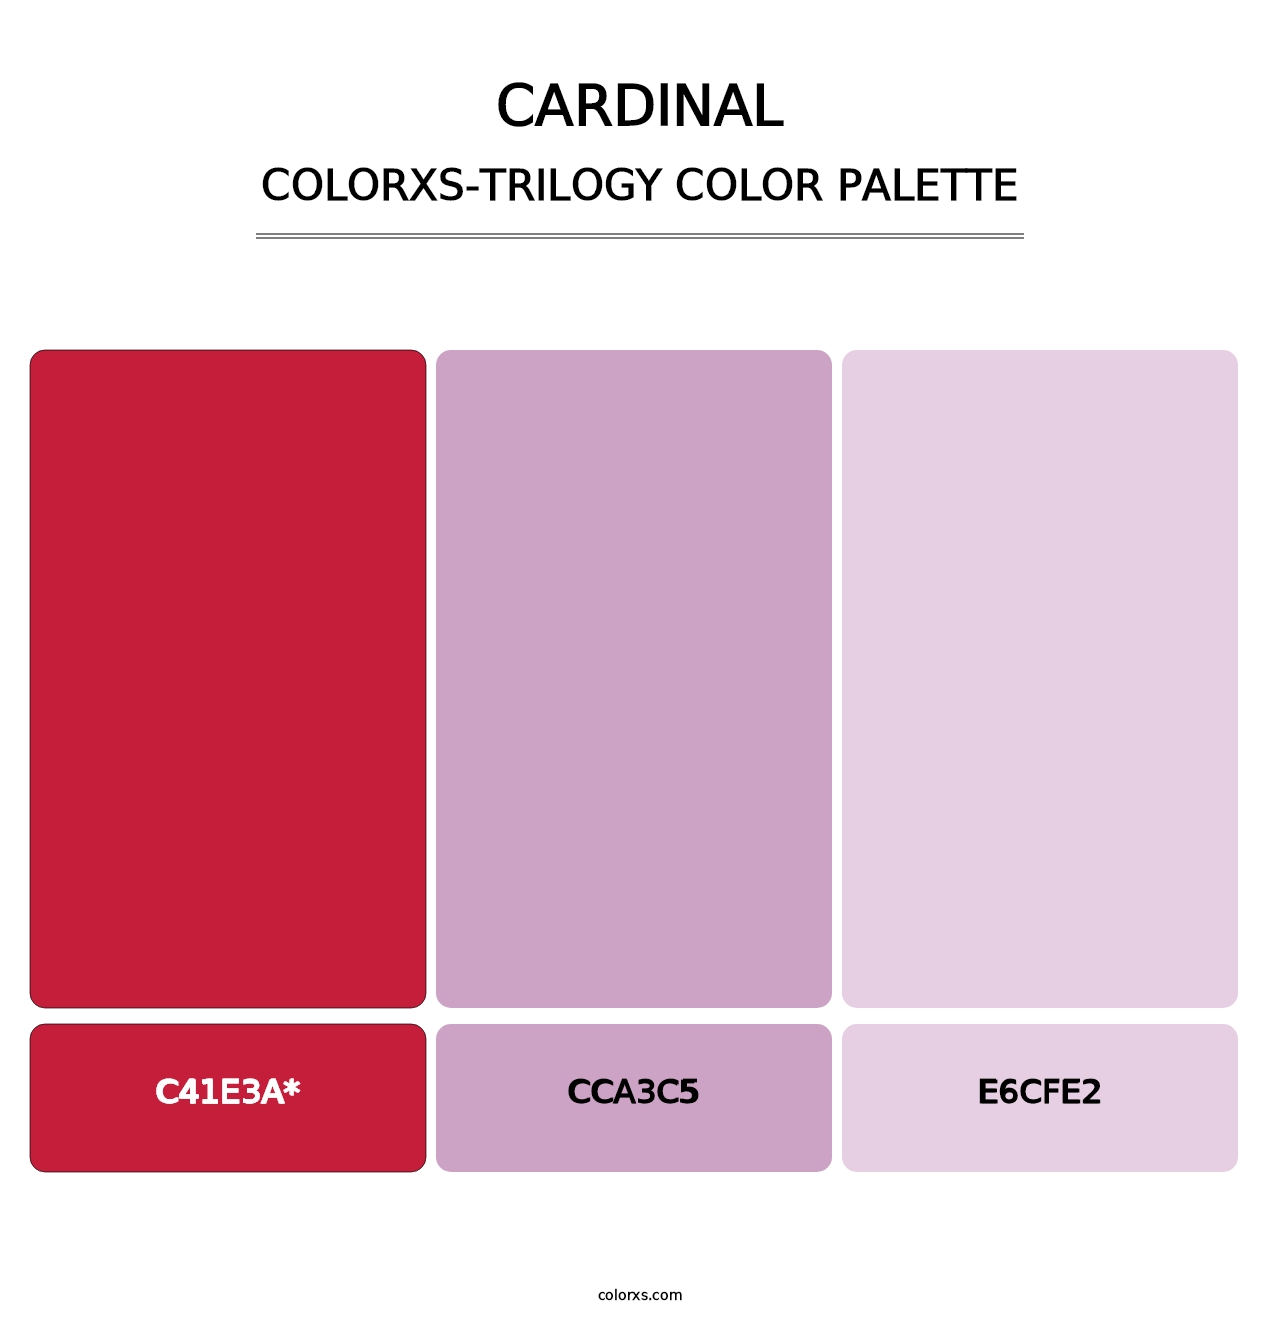 Cardinal - Colorxs Trilogy Palette